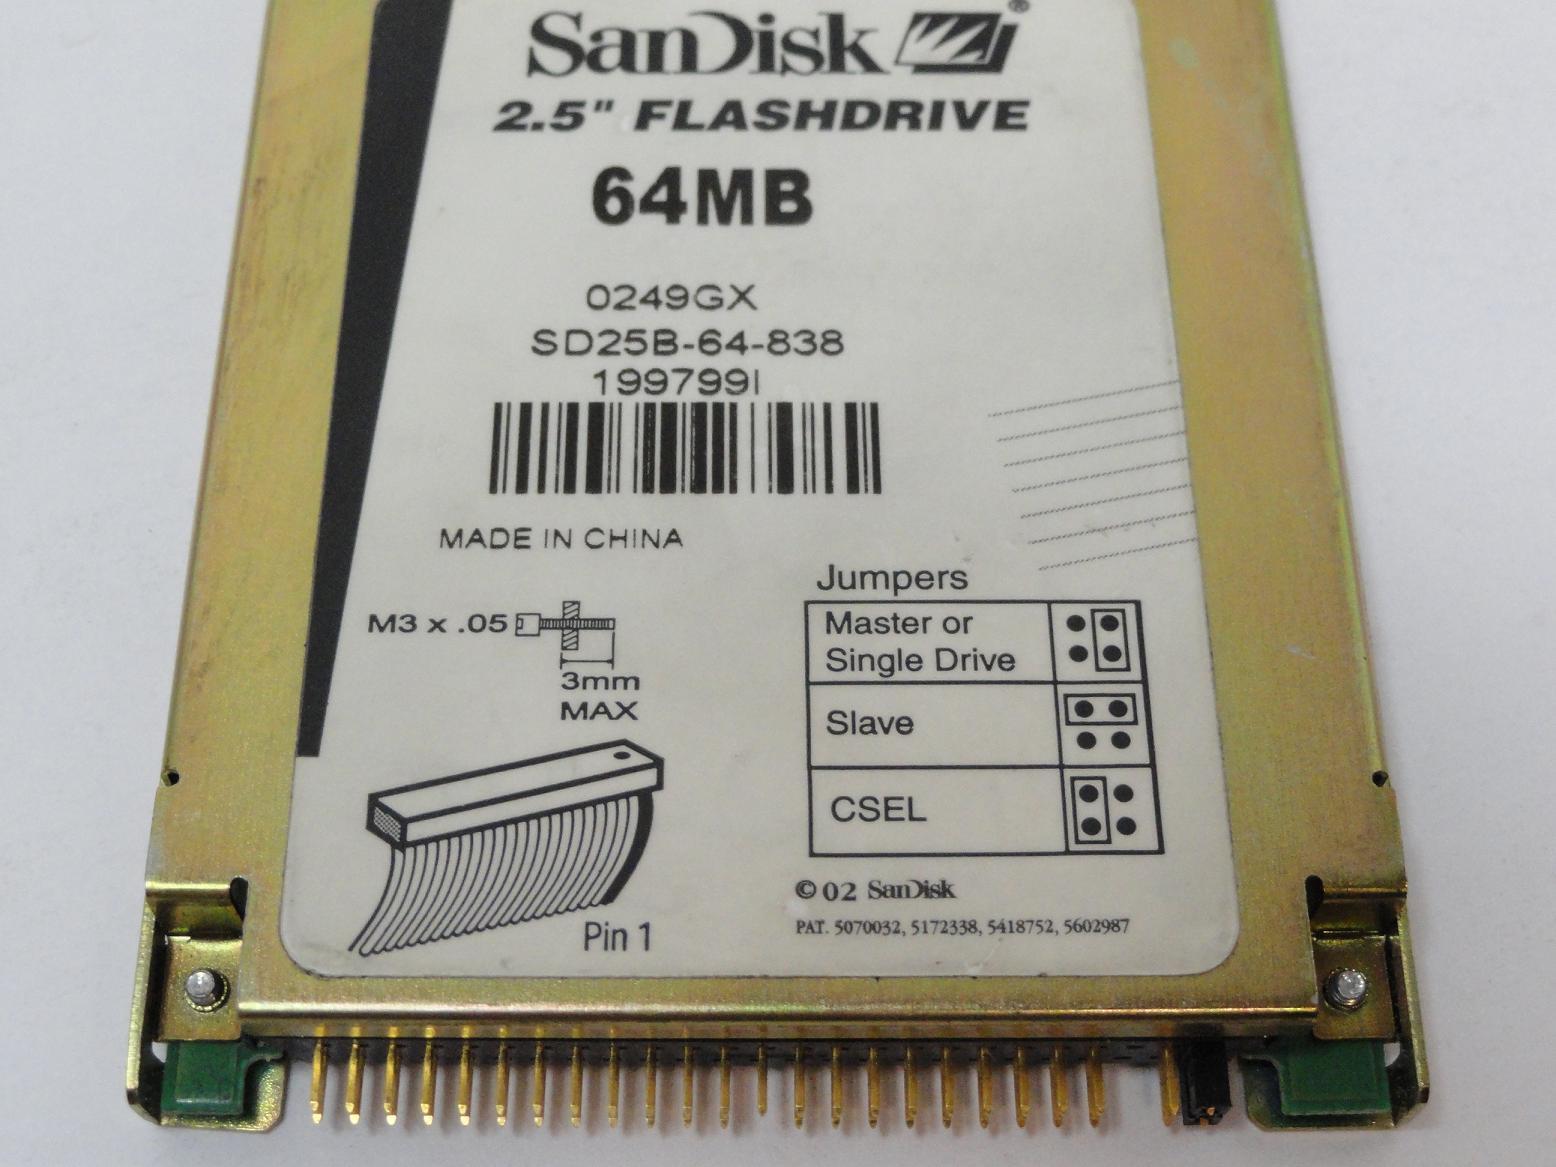 MC5103_SD25B-64-838_SanDisk 64MB IDE 2.5in Flash Disk - Image3